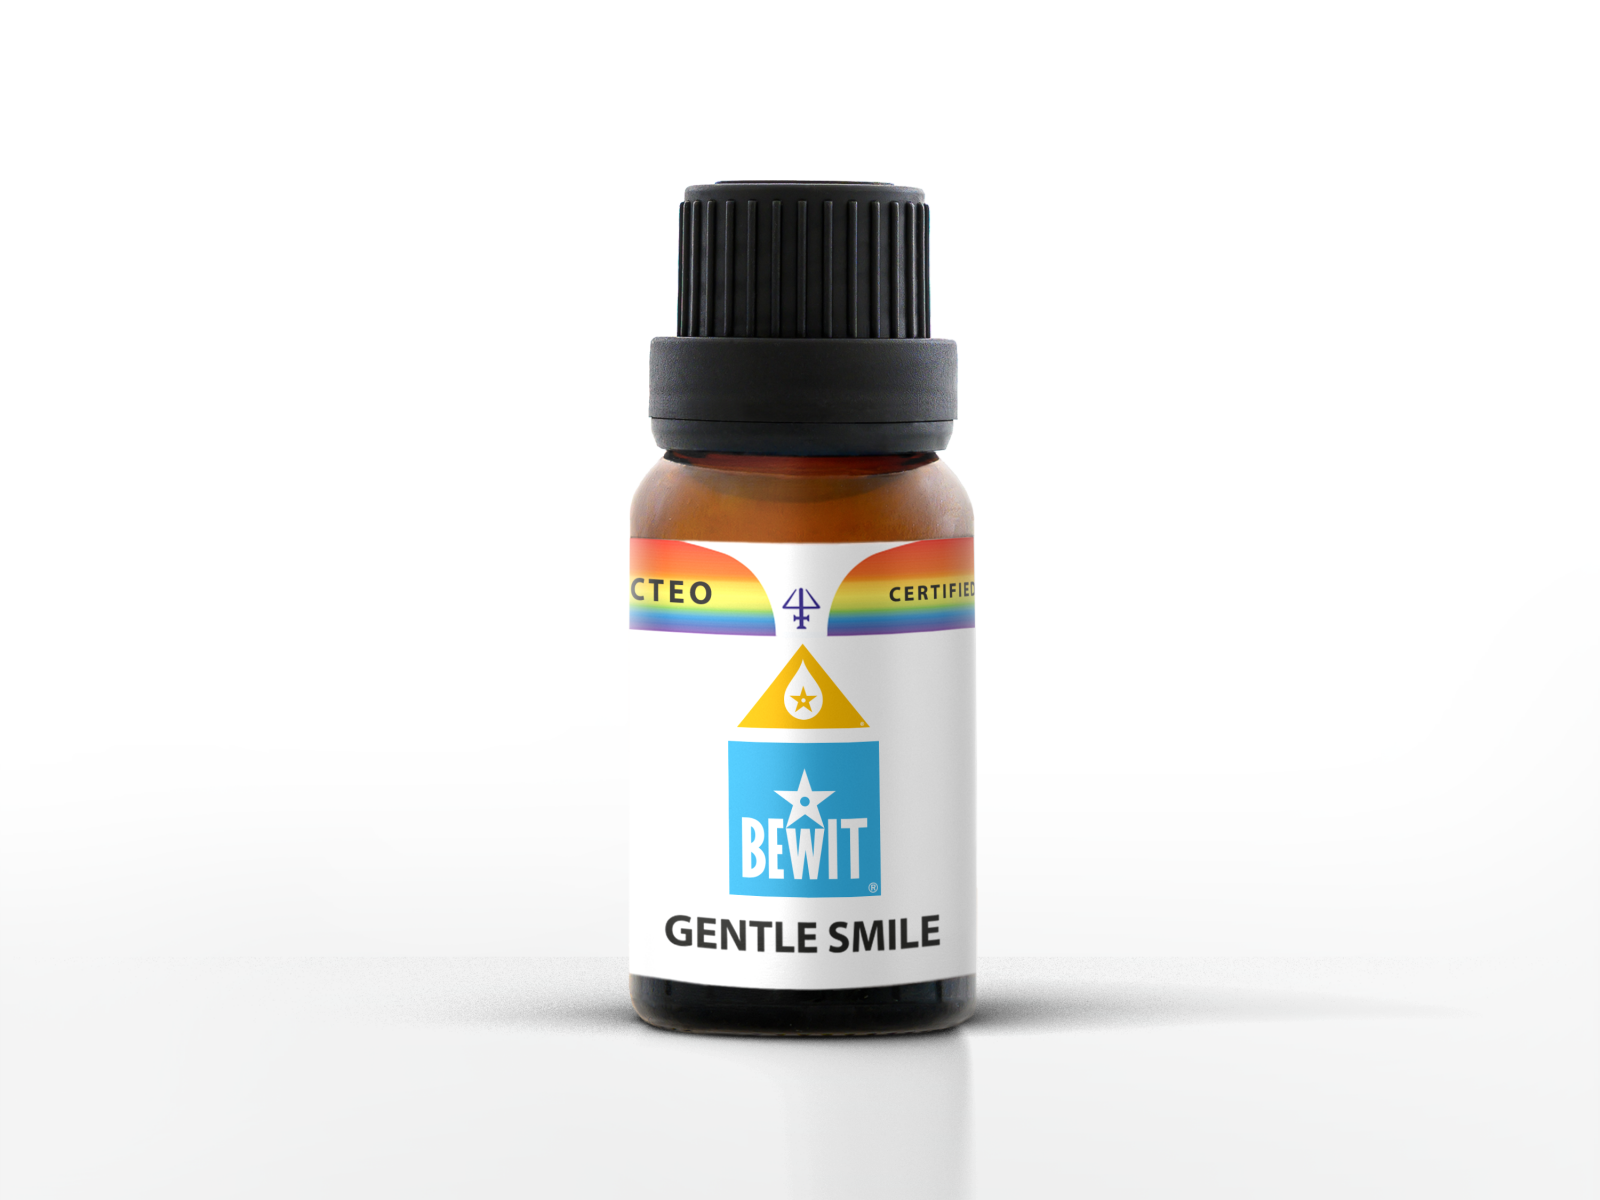 BEWIT GENTLE SMILE - Blend of essential oils - 1